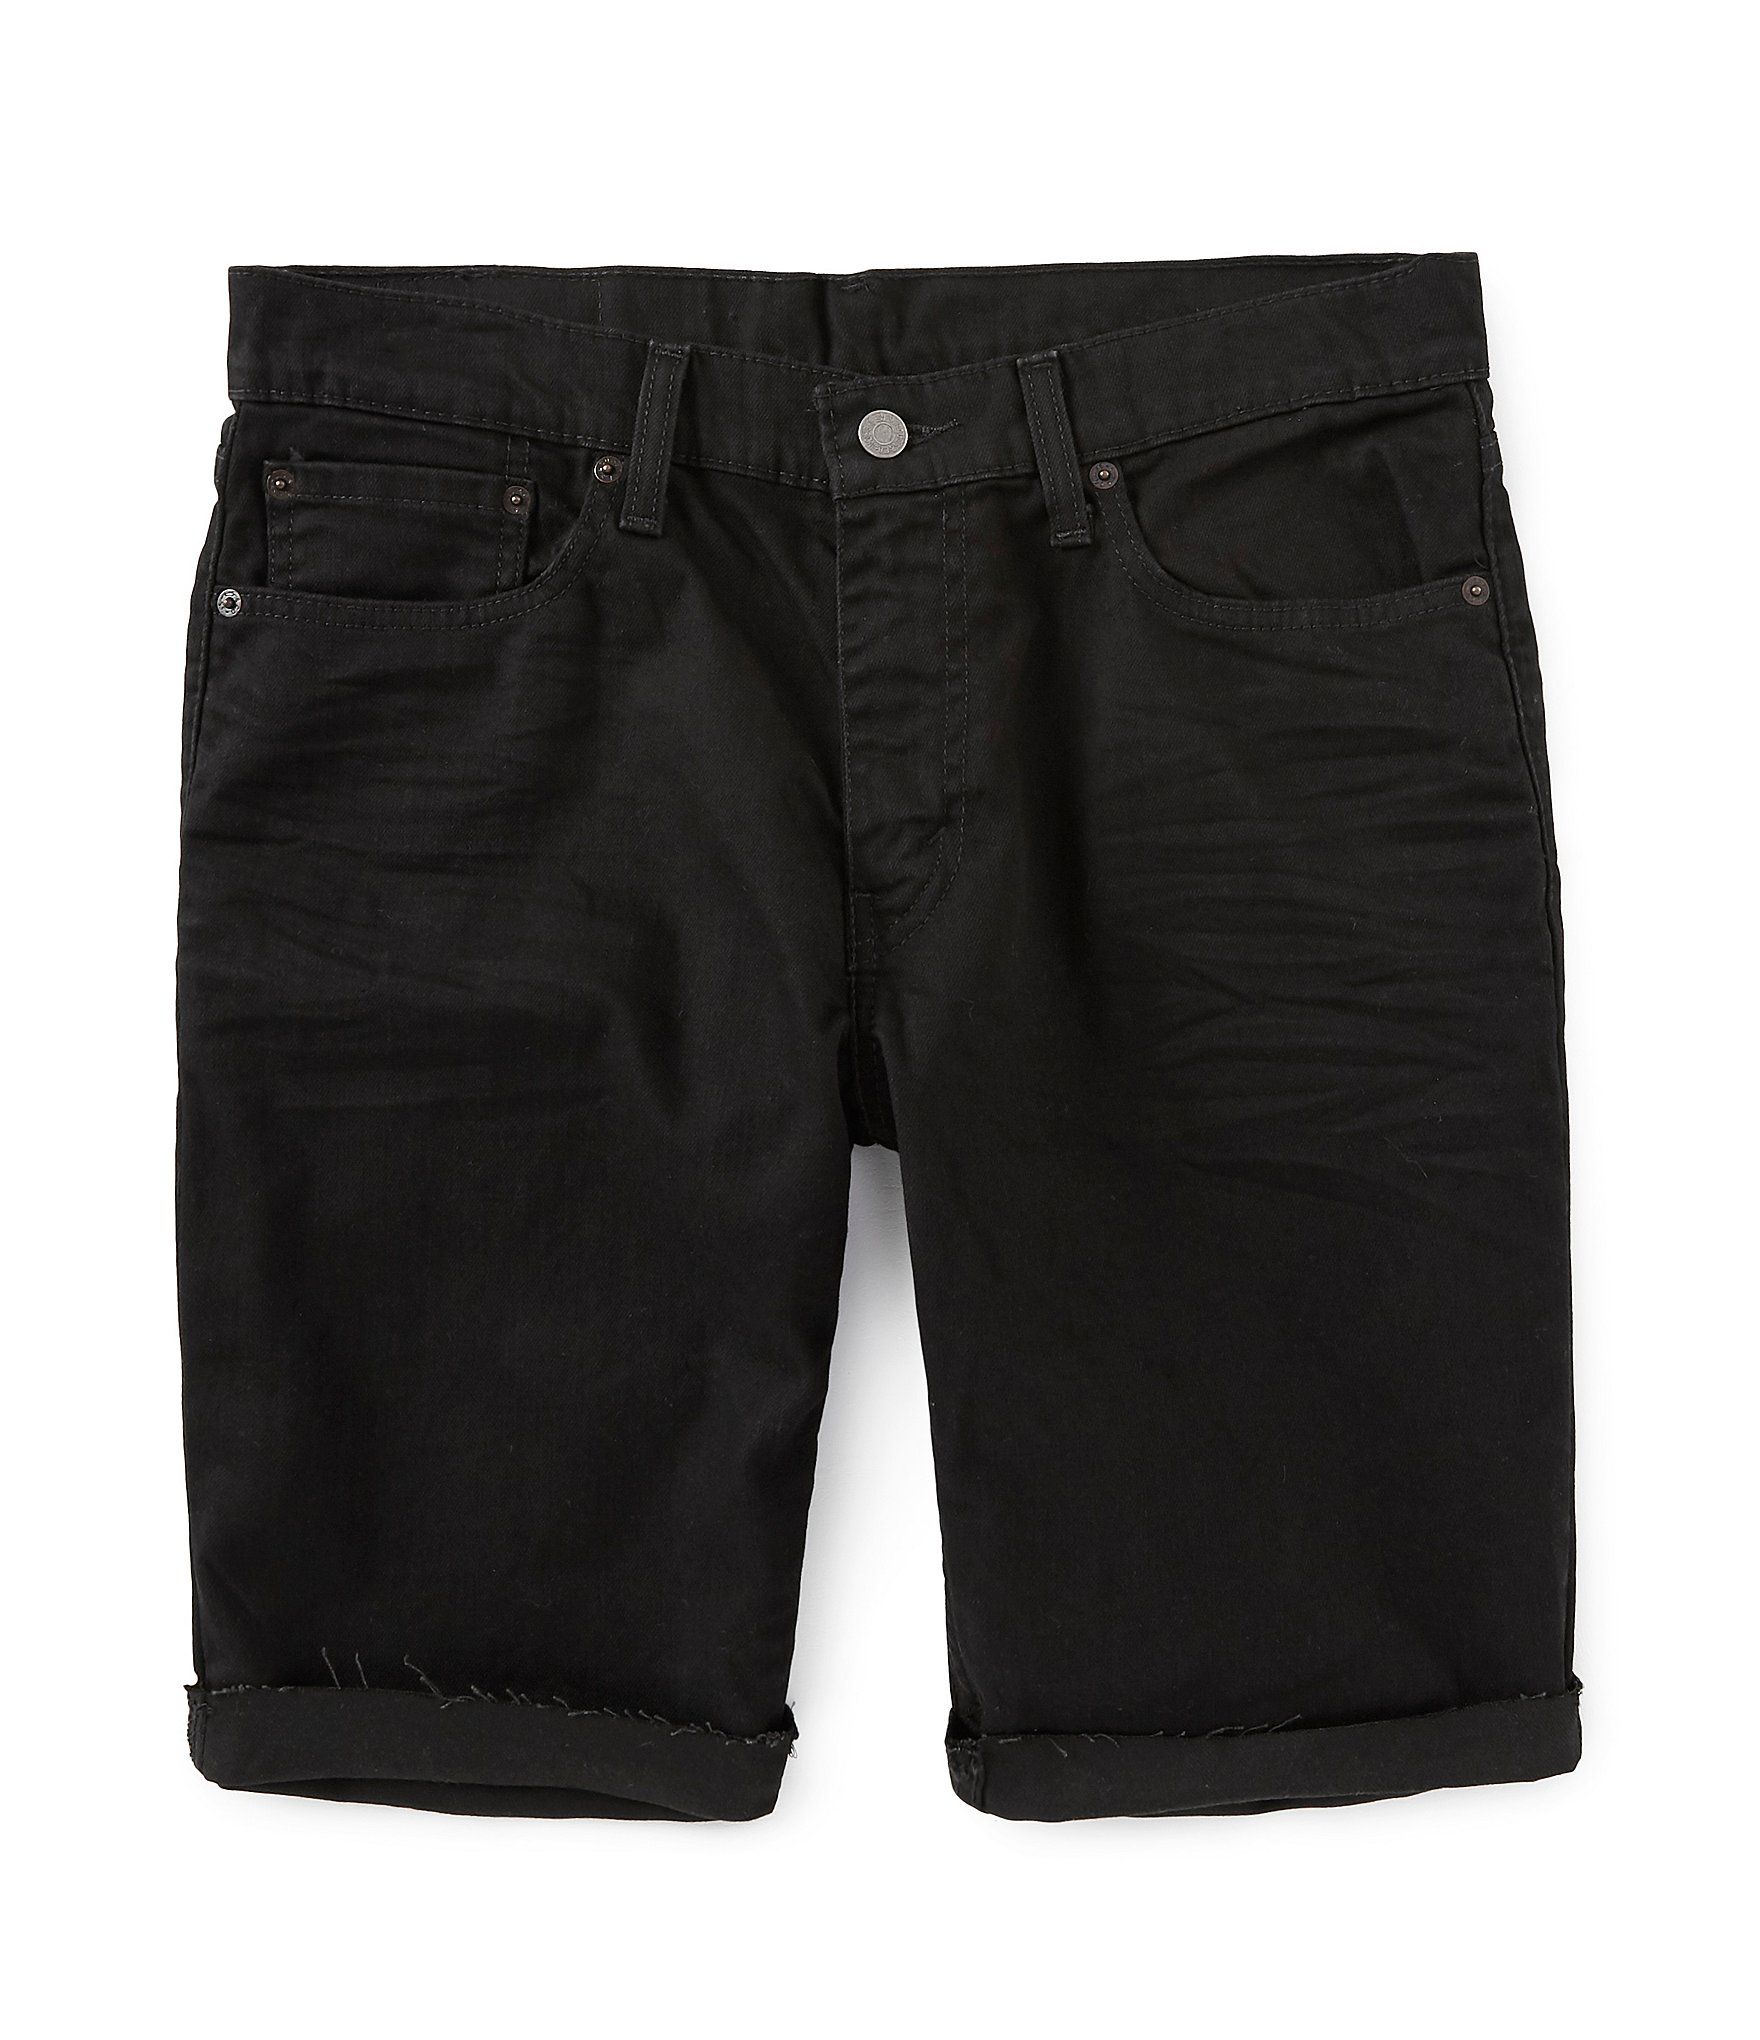 Levi’s® 511 Slim Fit 12 Inseam Cut Off Jean Shorts – Black 31